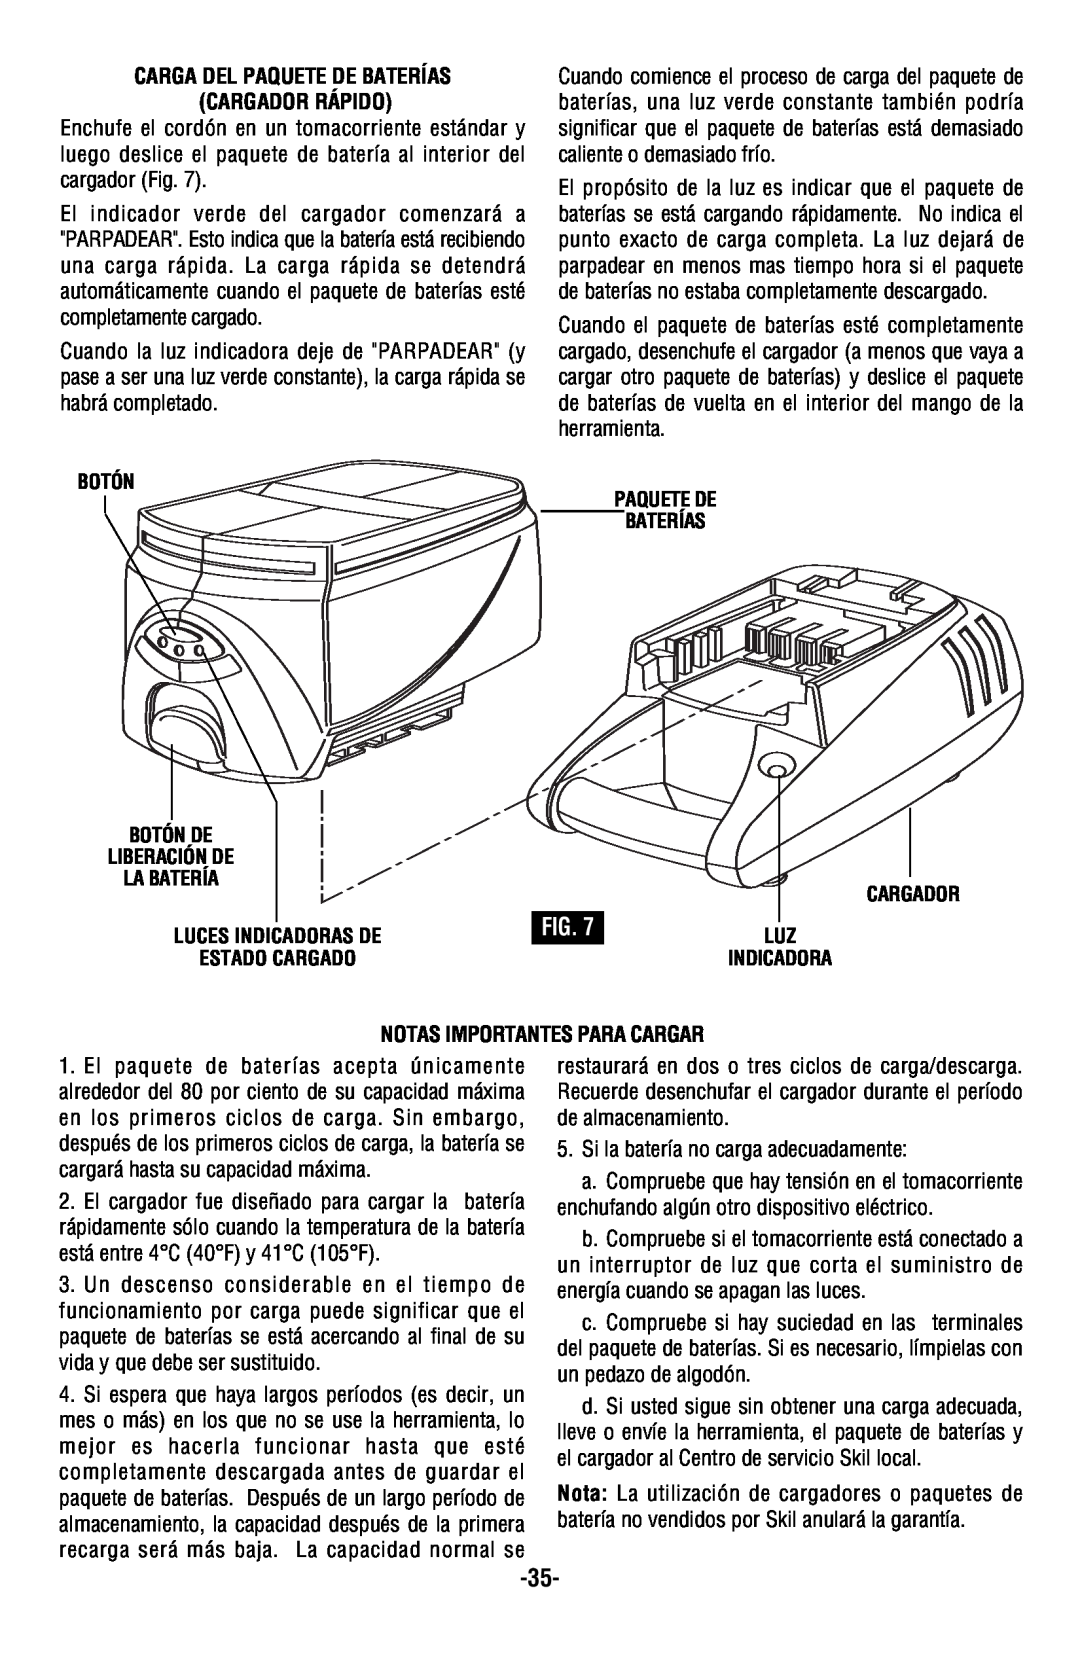 Skil 9350 manual Carga Del Paquete De Baterías Cargador Rápido, Notas Importantes Para Cargar 